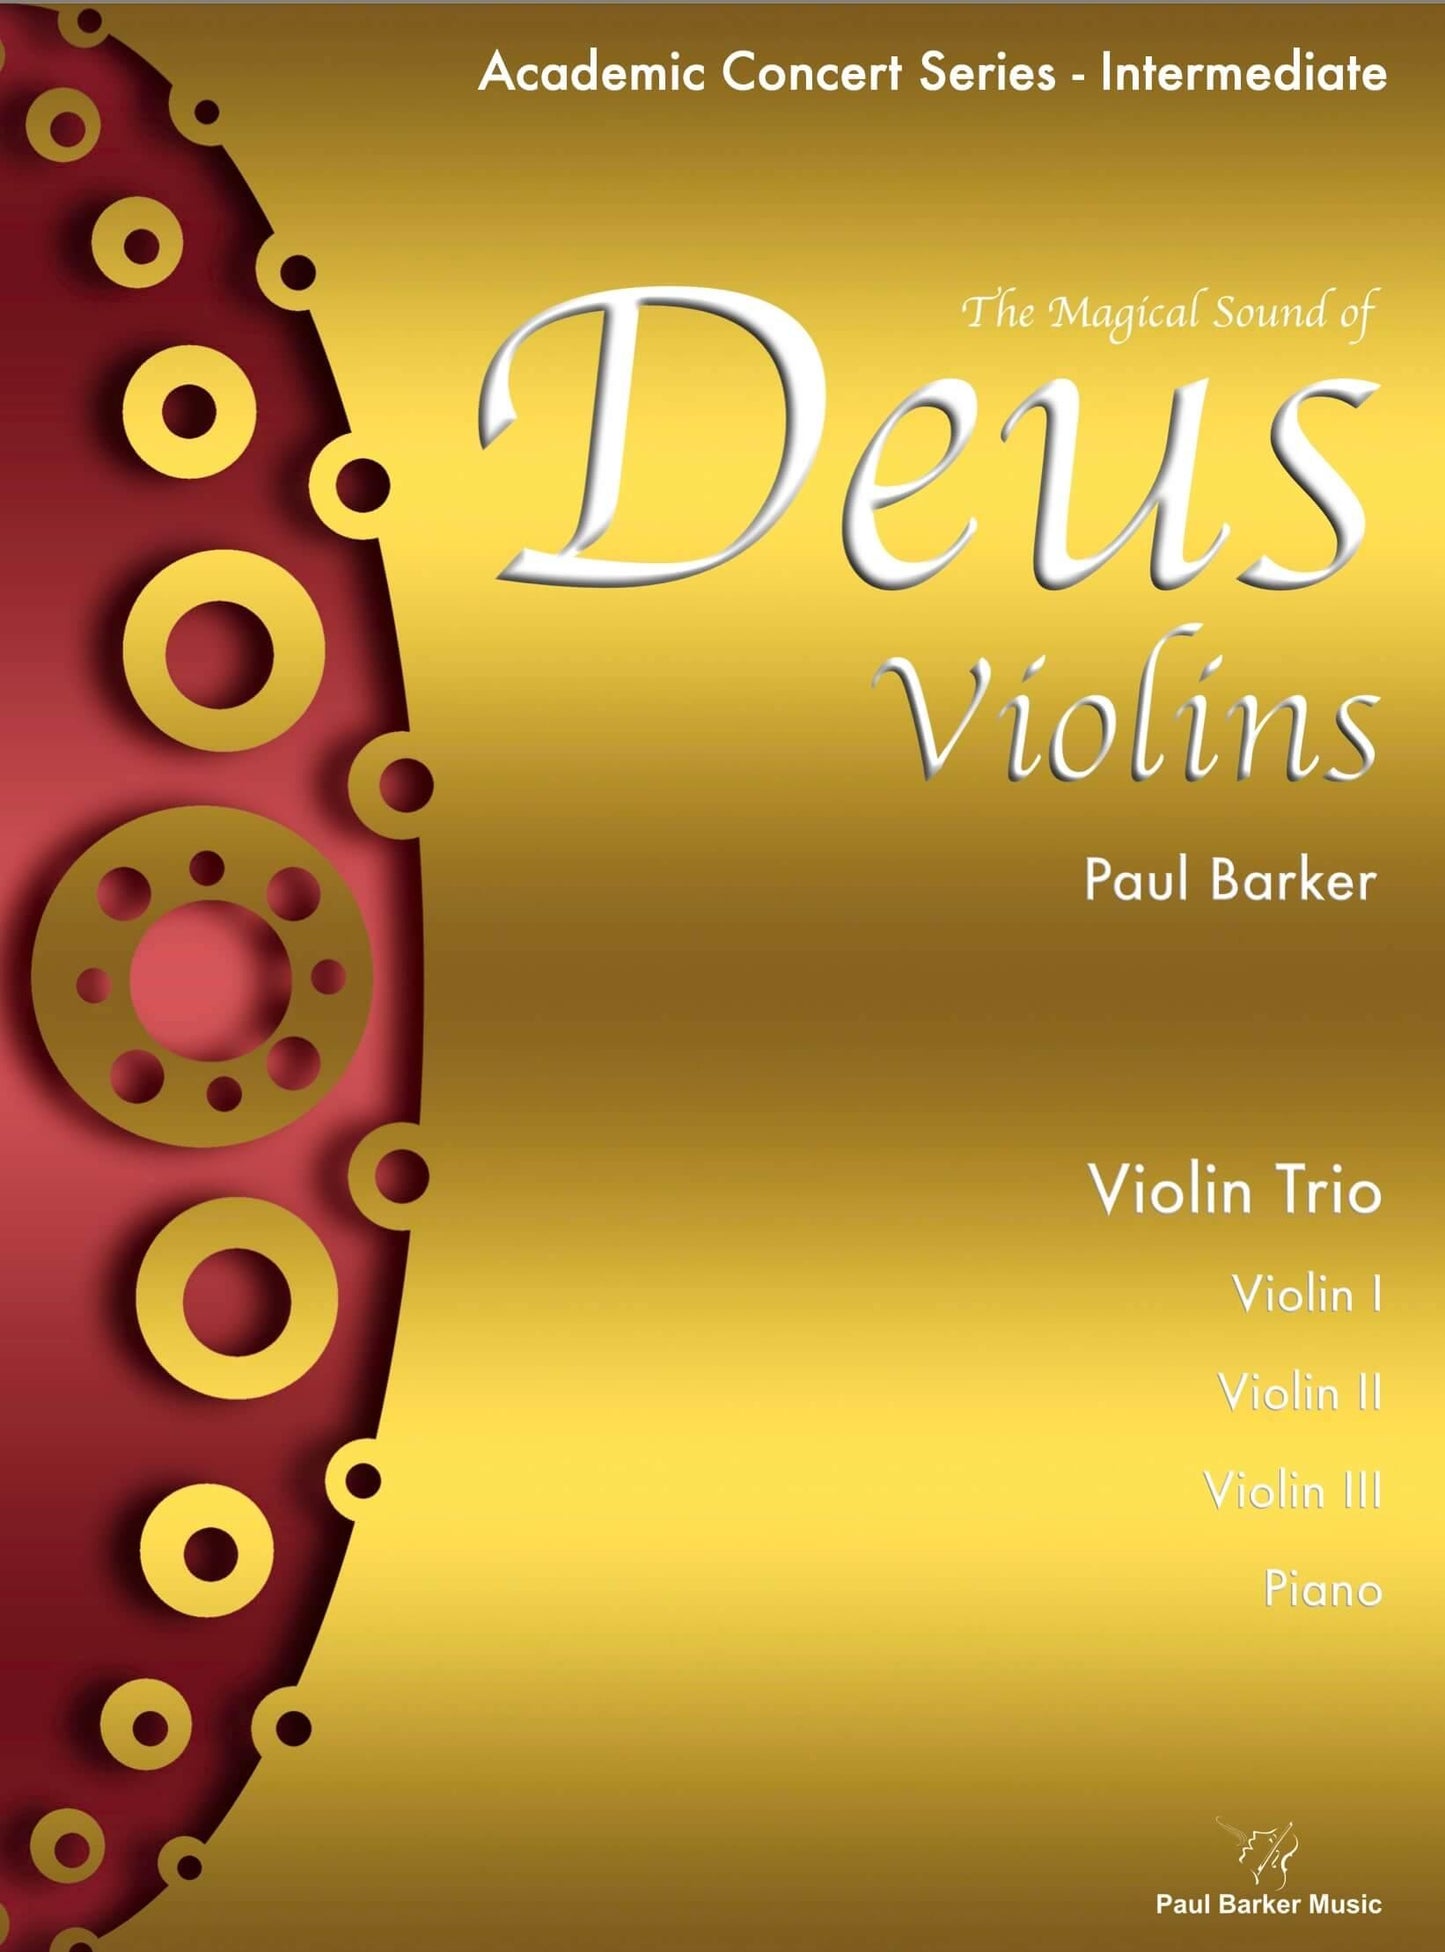 Deus Violins - Paul Barker Music 